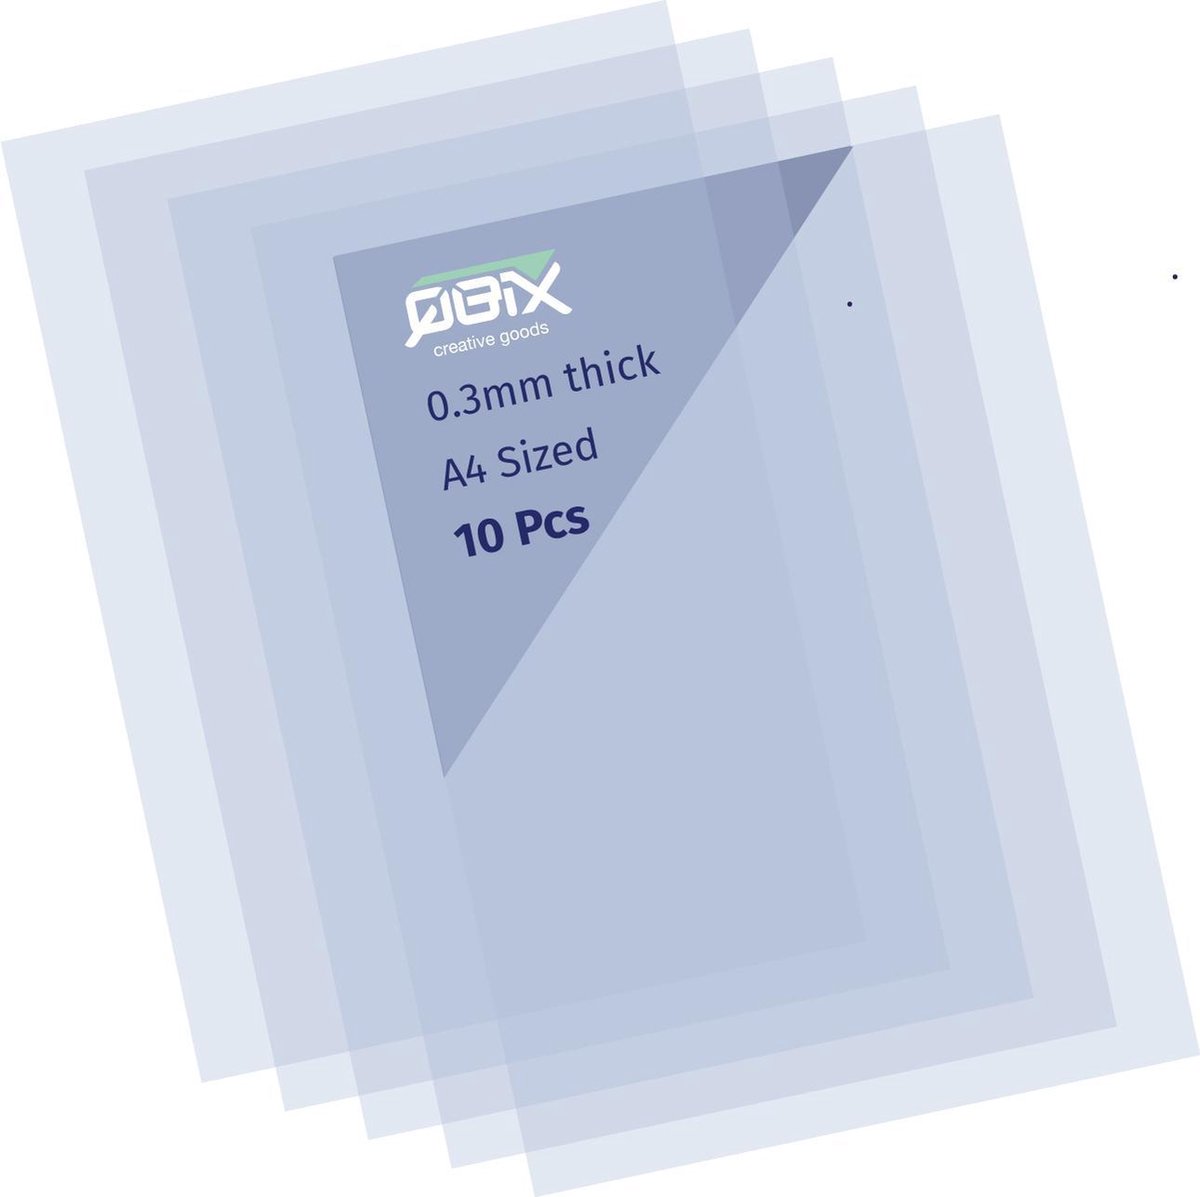 QBIX Plastic Mylar Vellen - 10 stuks A4 Formaat Transparante Kunststof - 0.3mm dikte - QBIX